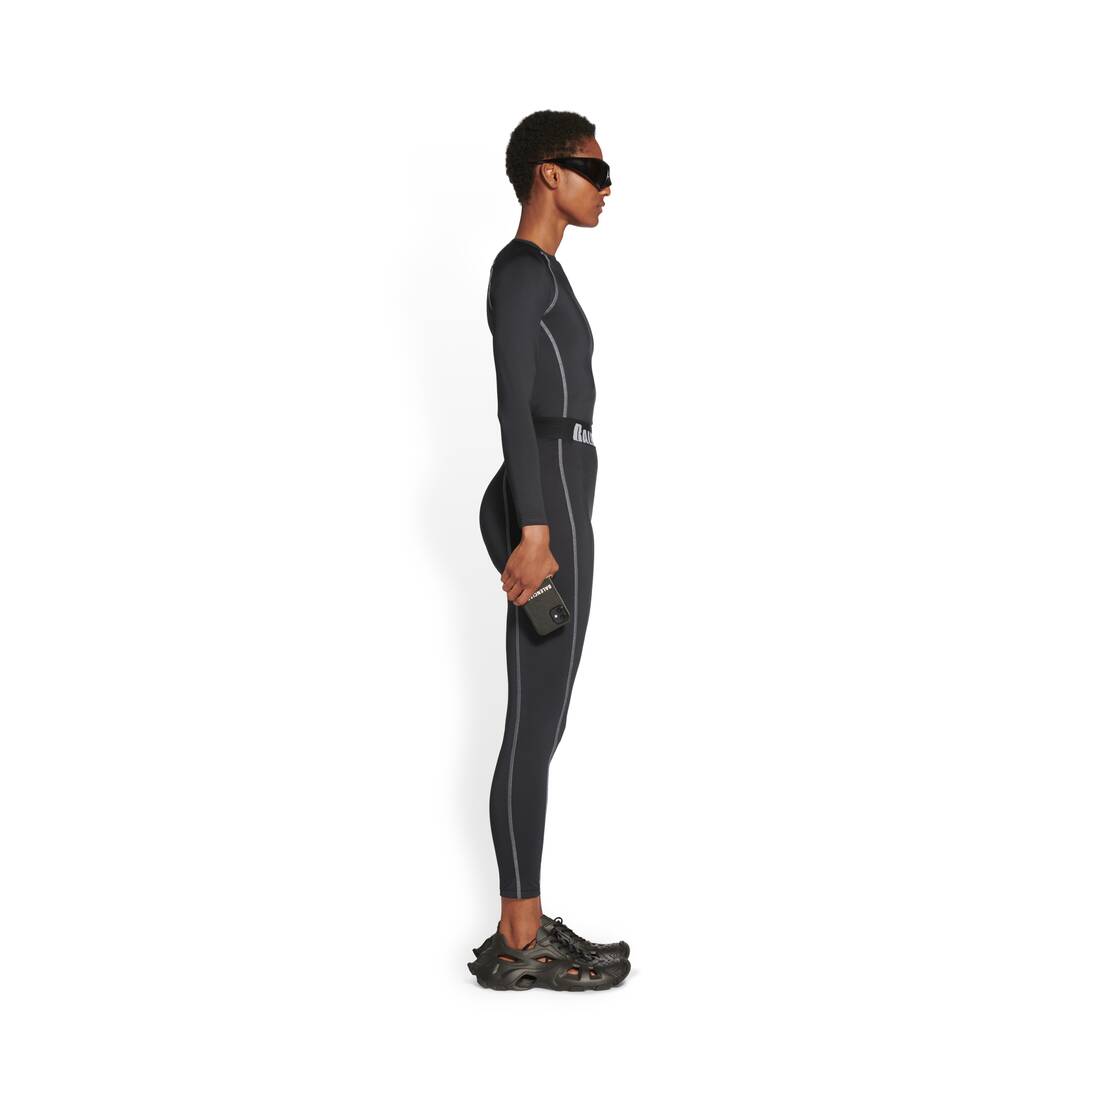 Black Cropped leggings VETEMENTS - Vitkac Canada